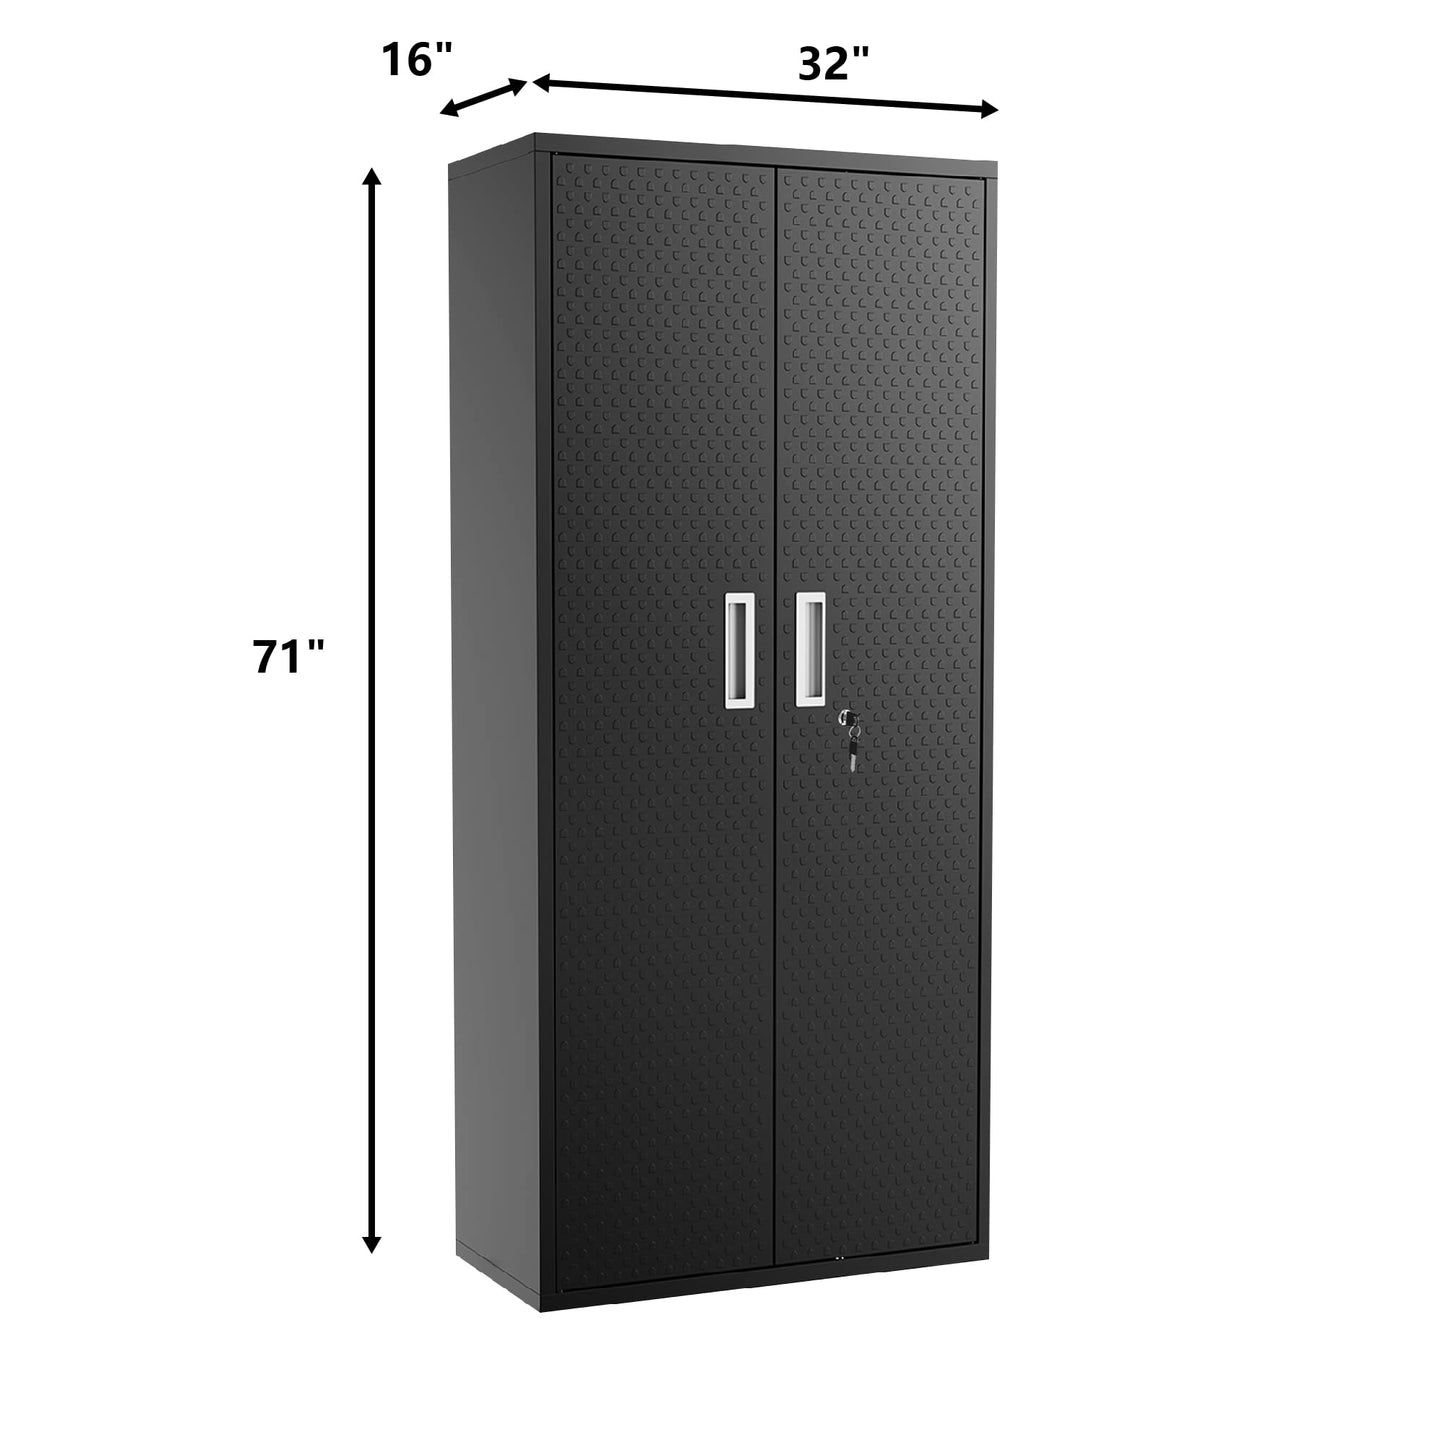 Metal Storage Cabinets Locker for Home Office, 71" Garage Storage Cabinet with Lockable Door,Adjustable Shelves and Hanging Rod, Steel Wardrobe